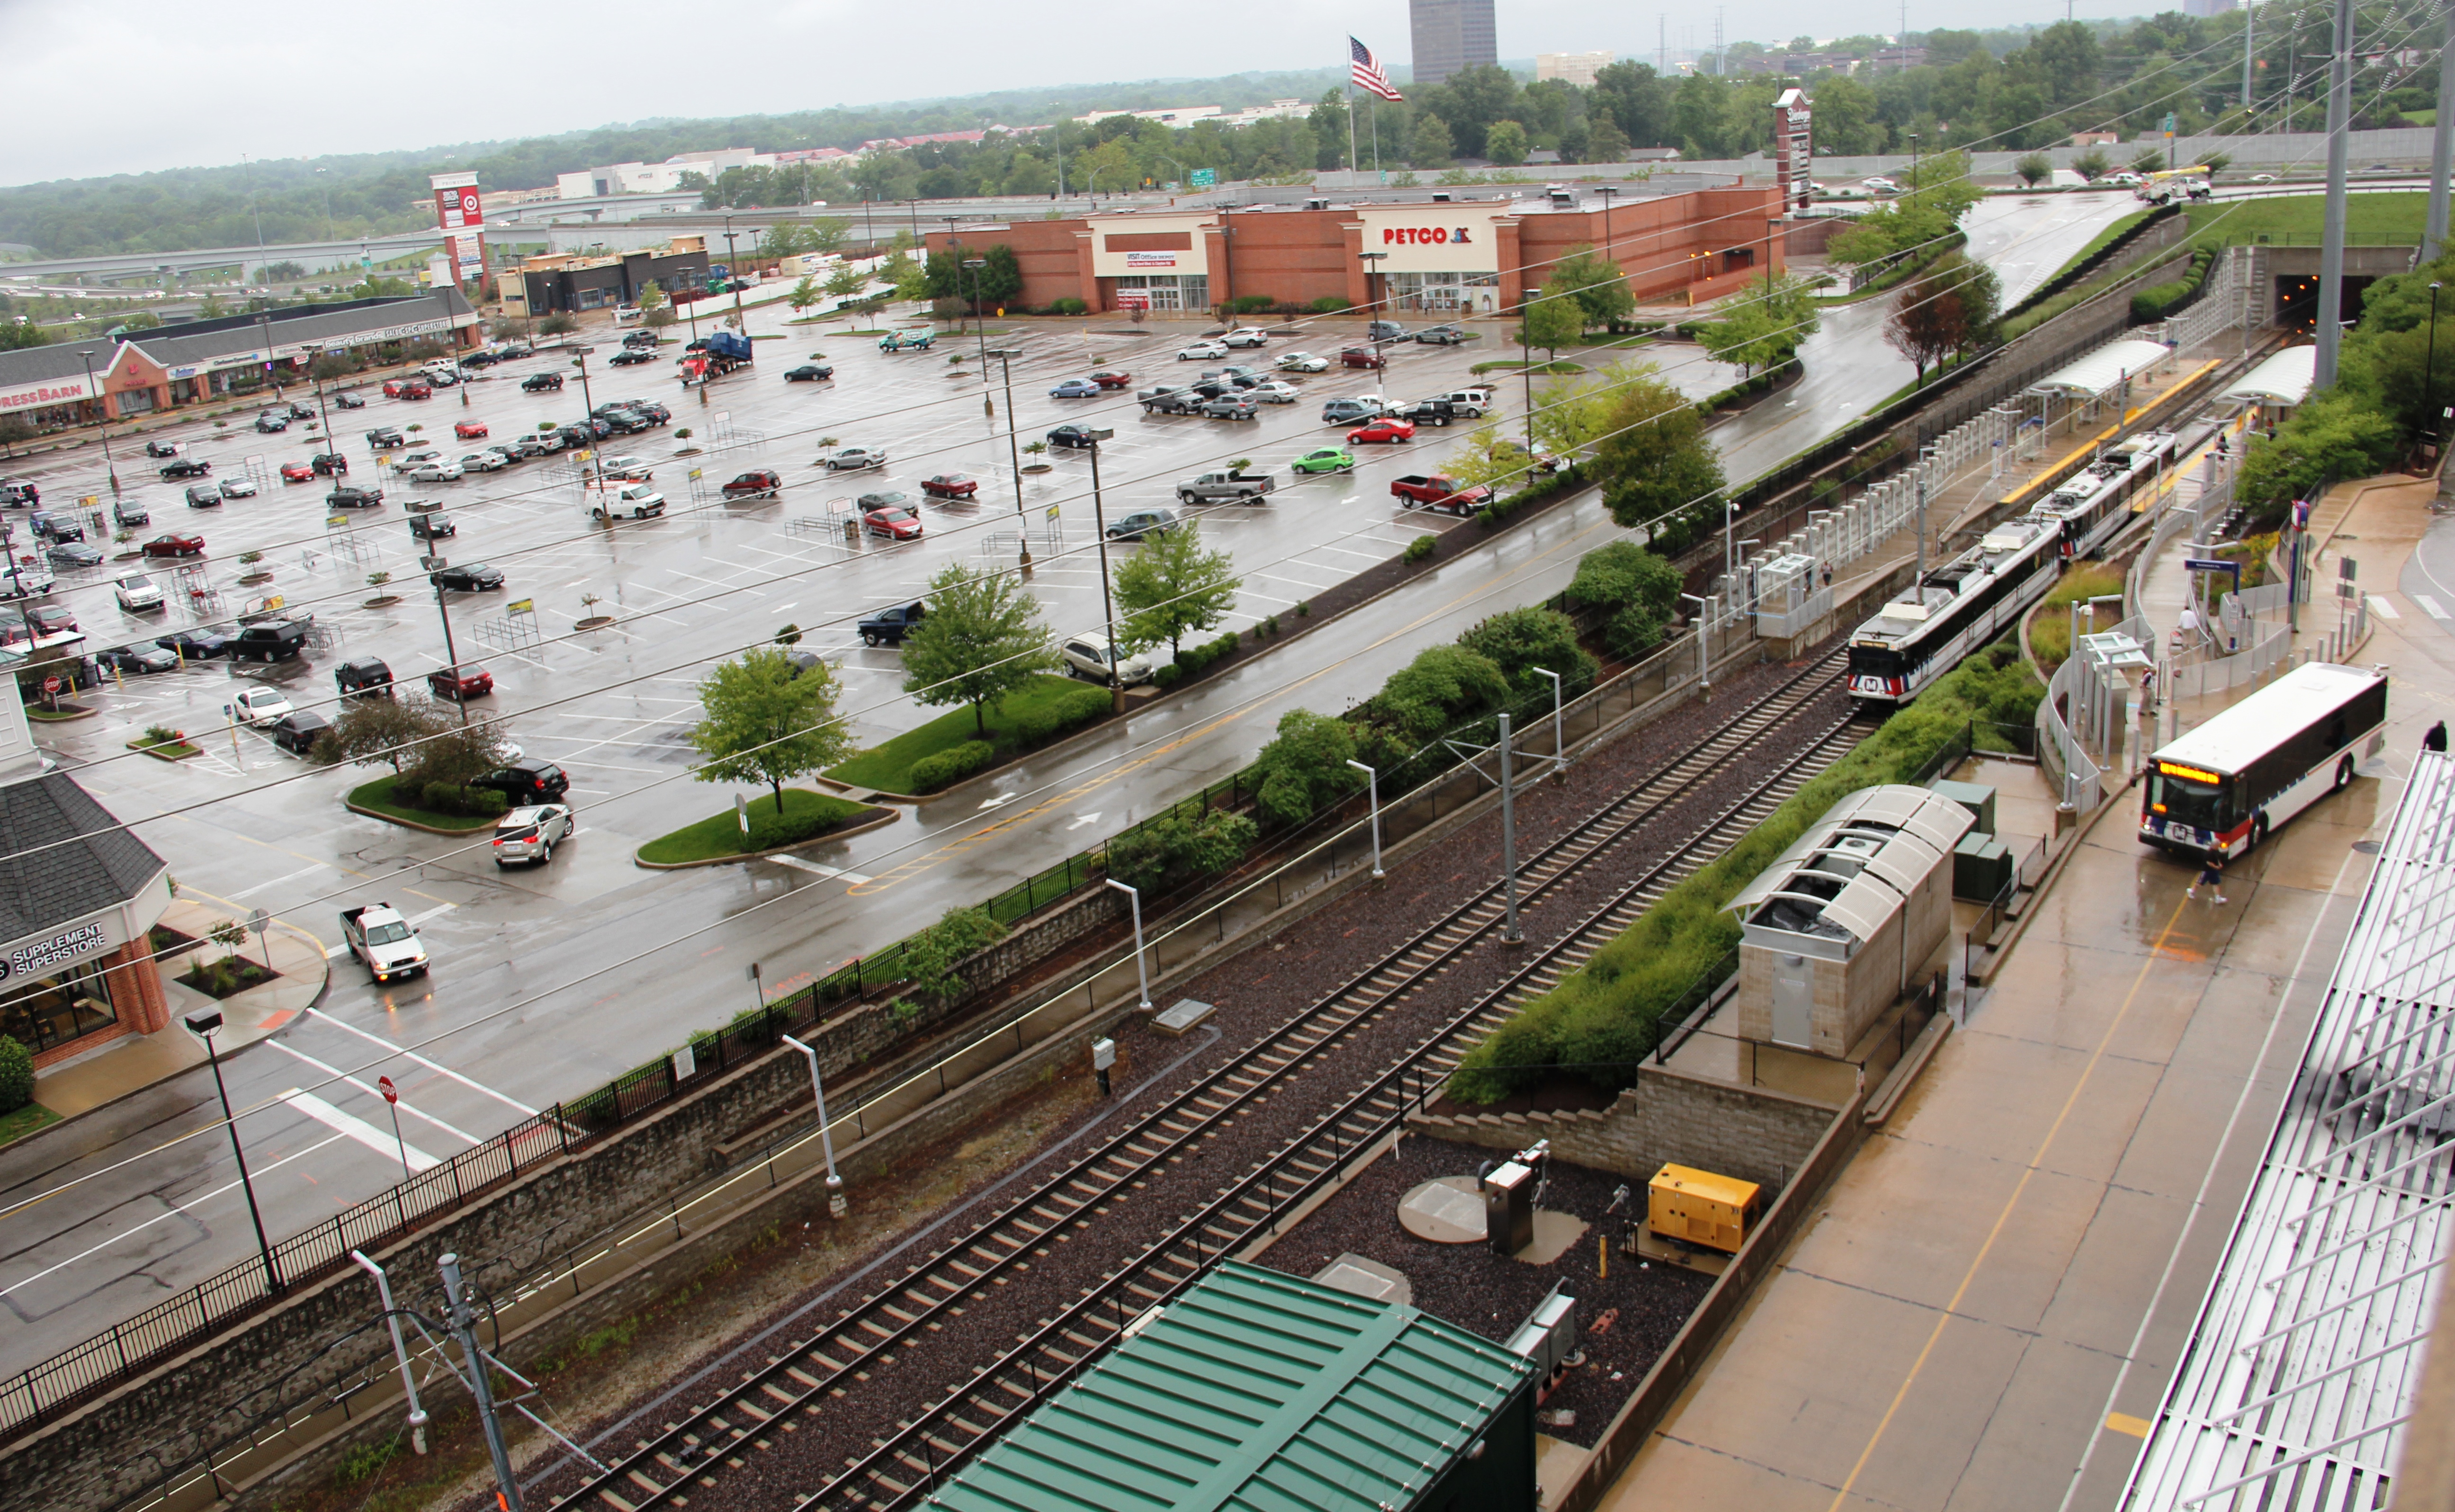 Brentwood I-64 Station Walkway To Temporarily Close Tomorrow | Metro Transit – St. Louis